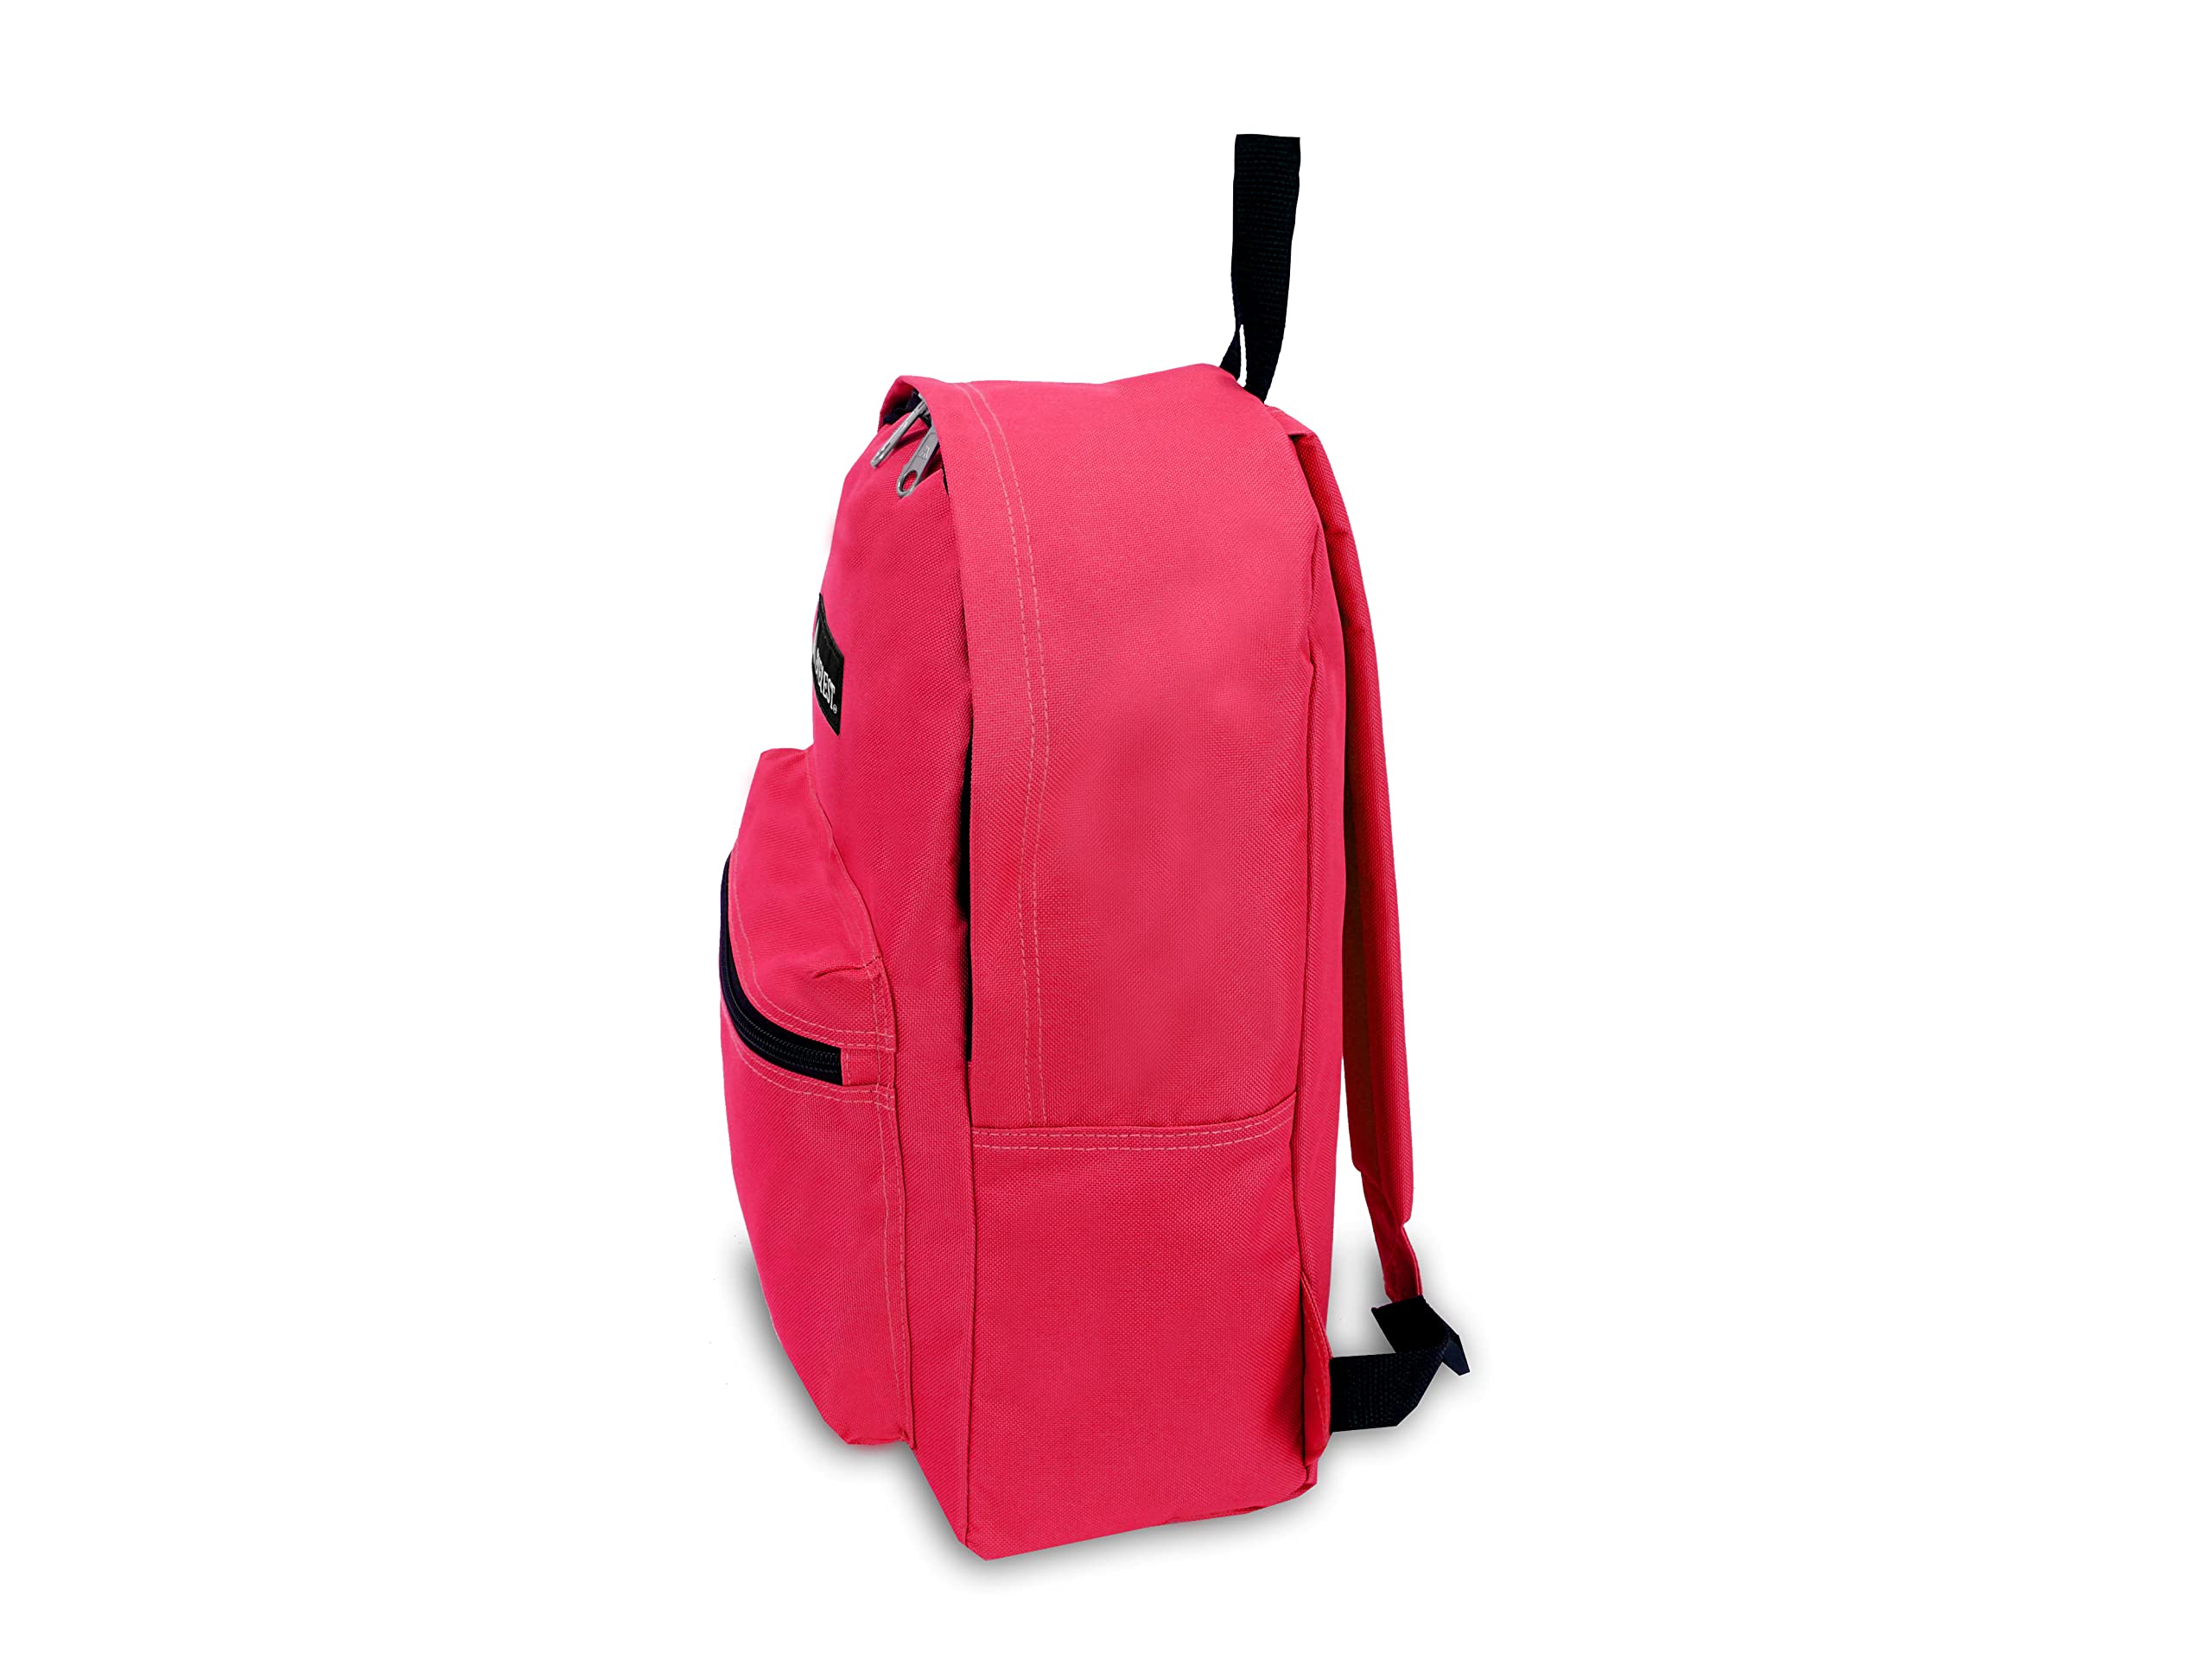 Everest Basic Backpack, Hot Pink, One Size